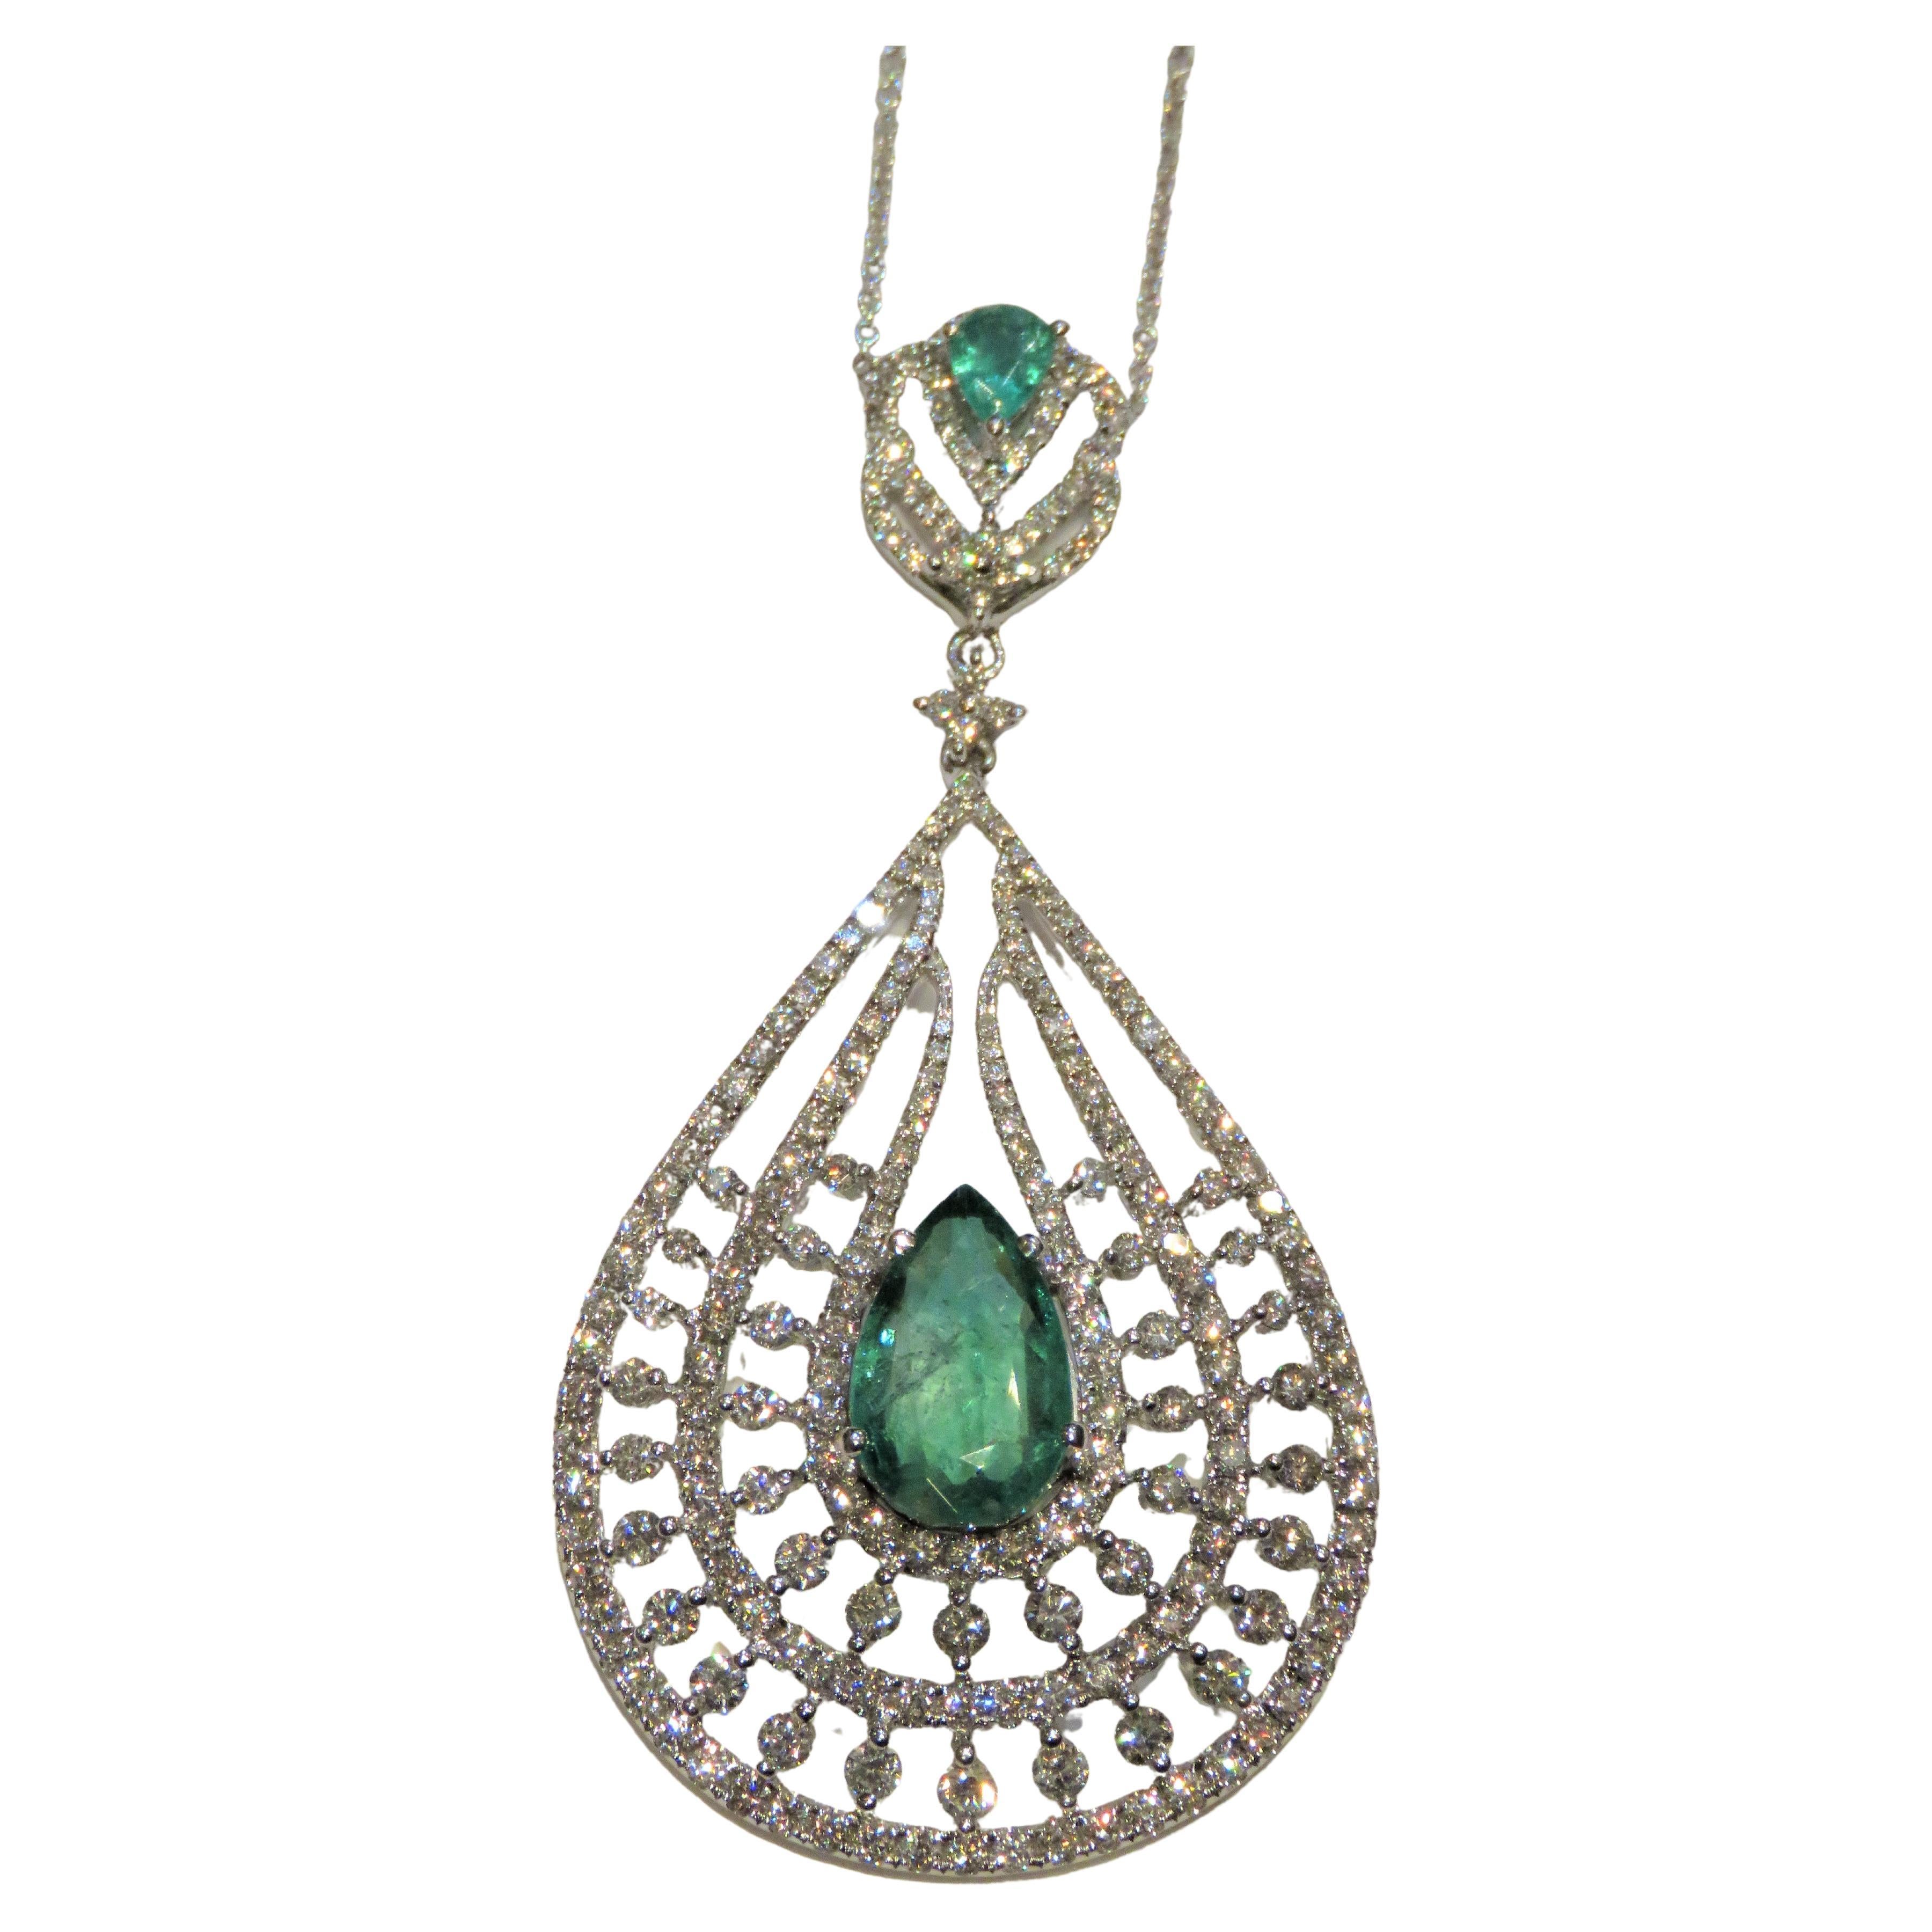 Collier pendentif en or 18Kt avec émeraude verte scintillante et diamant.